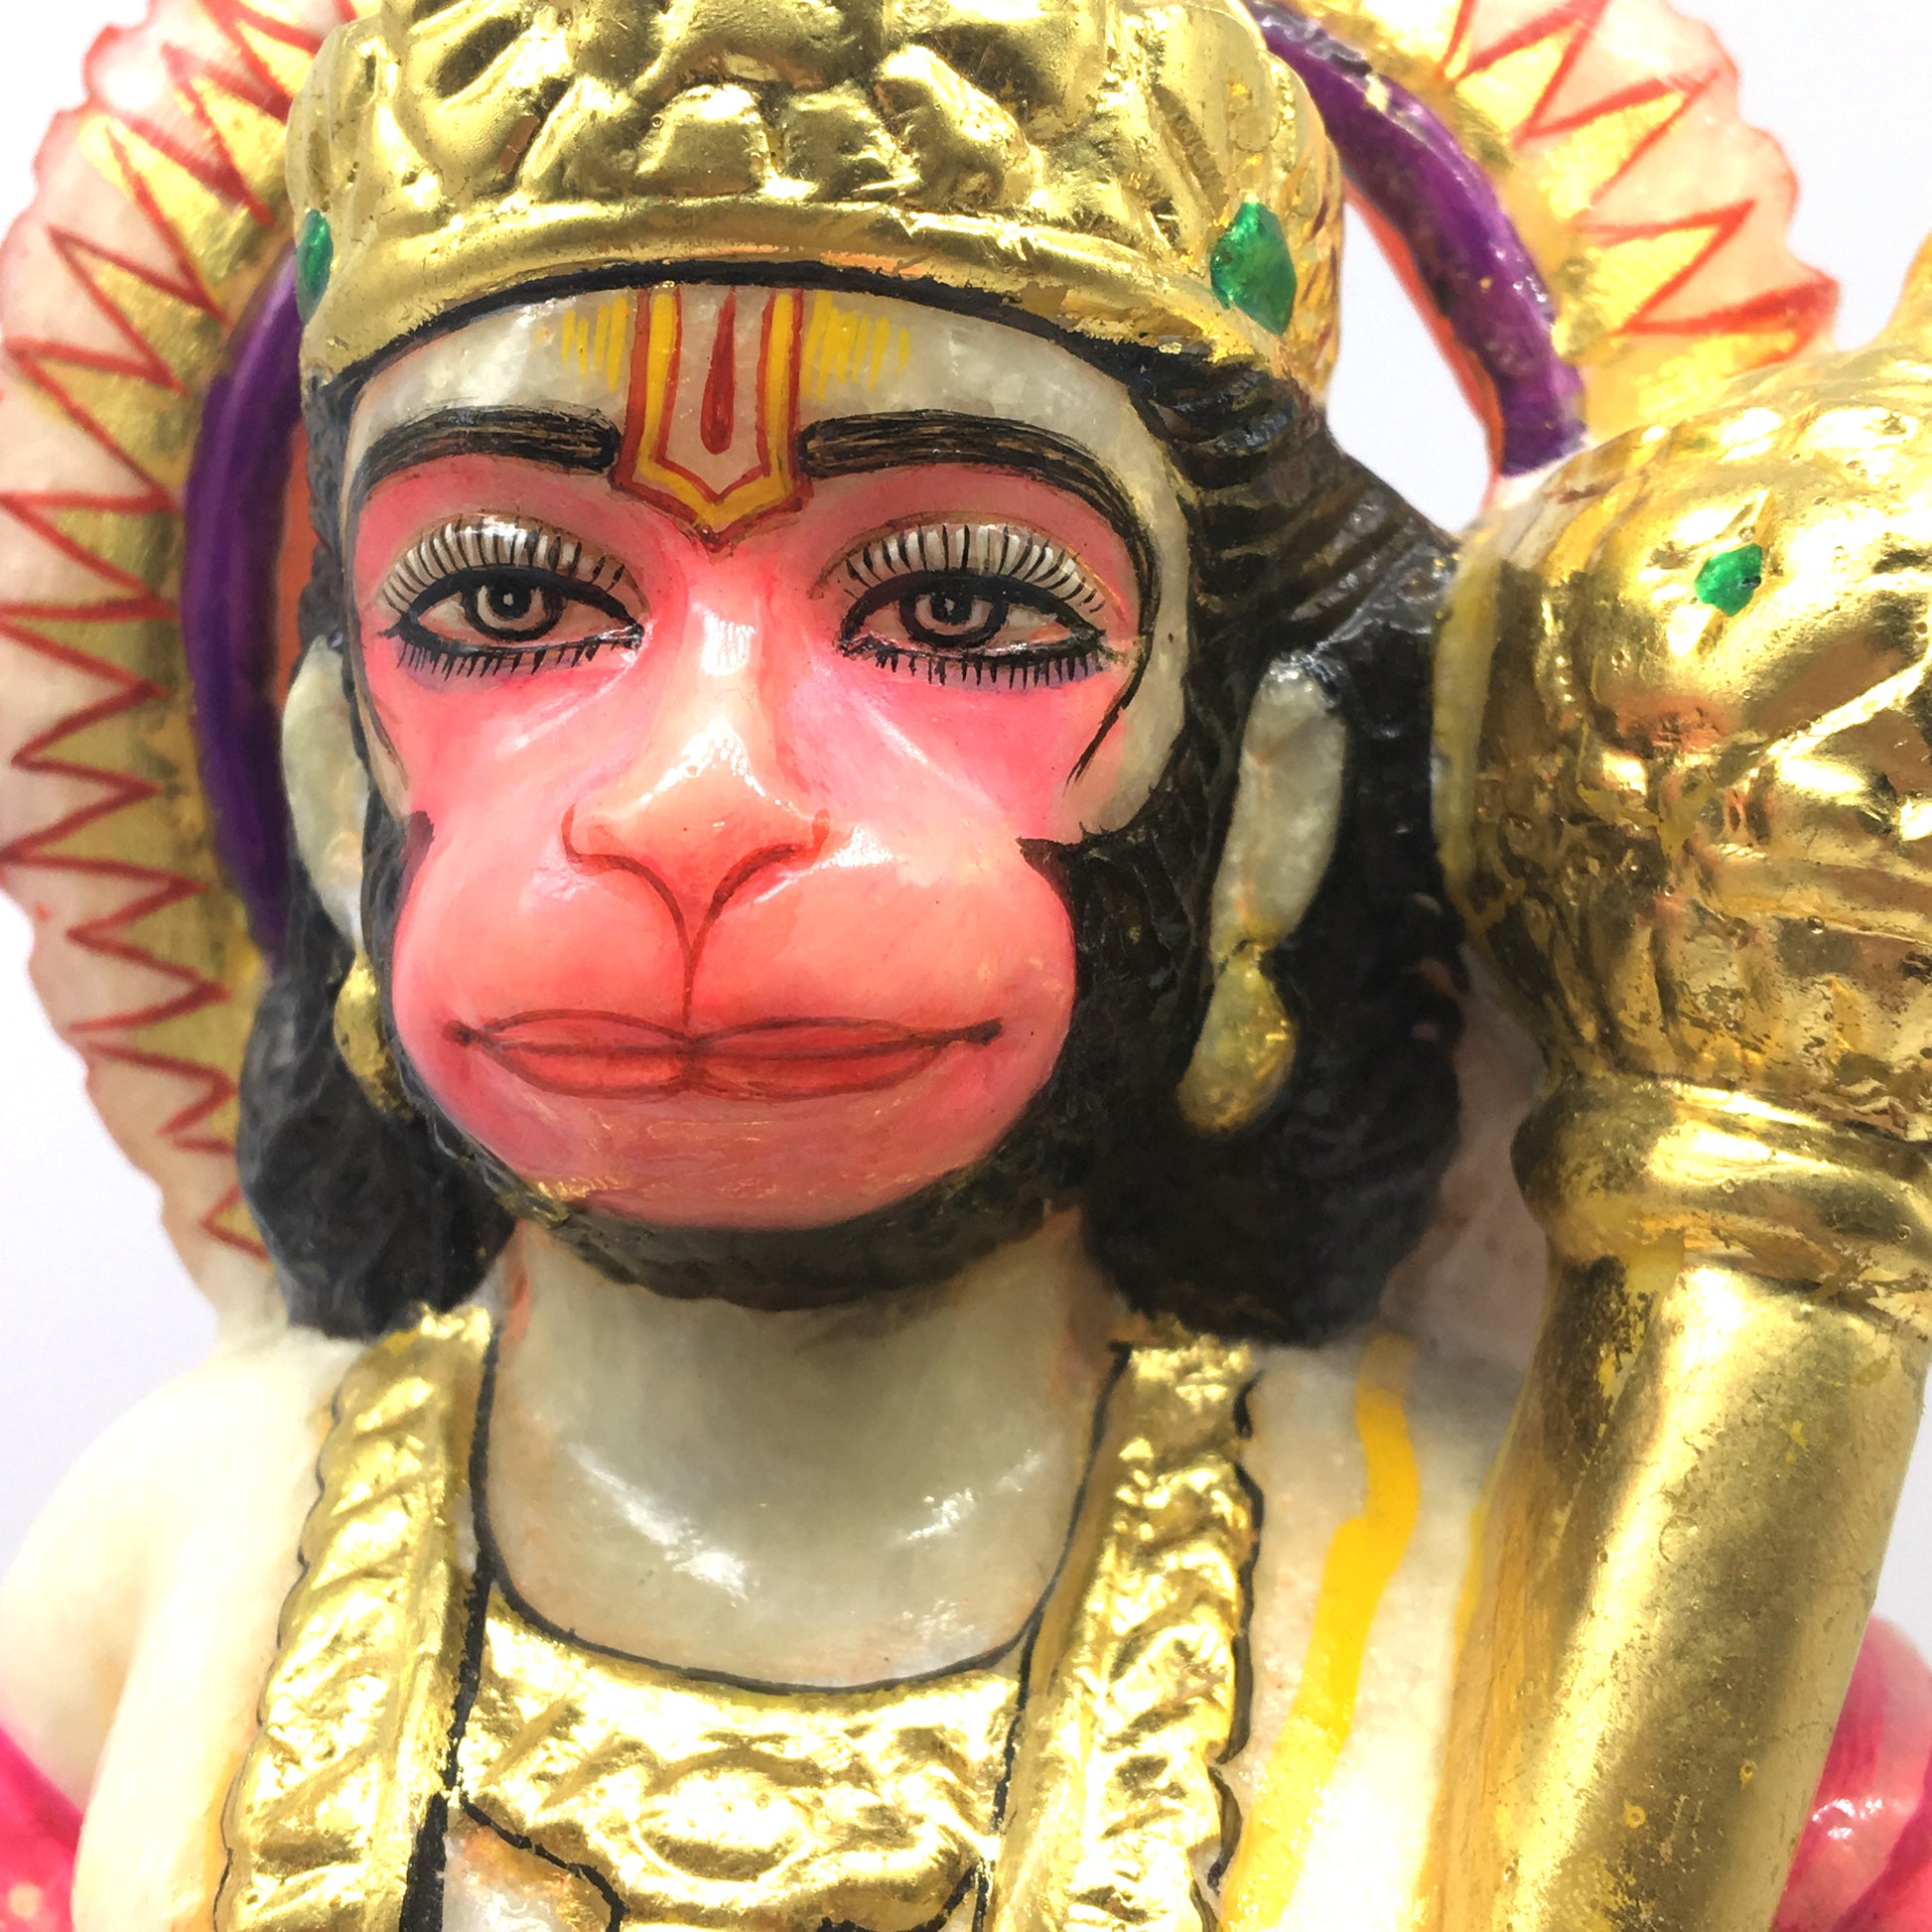 Handcrafted Pure White Marble Lord Hanuman Idol Murti Statue 12.2 " - Monkey God - Montecinos Ethnic